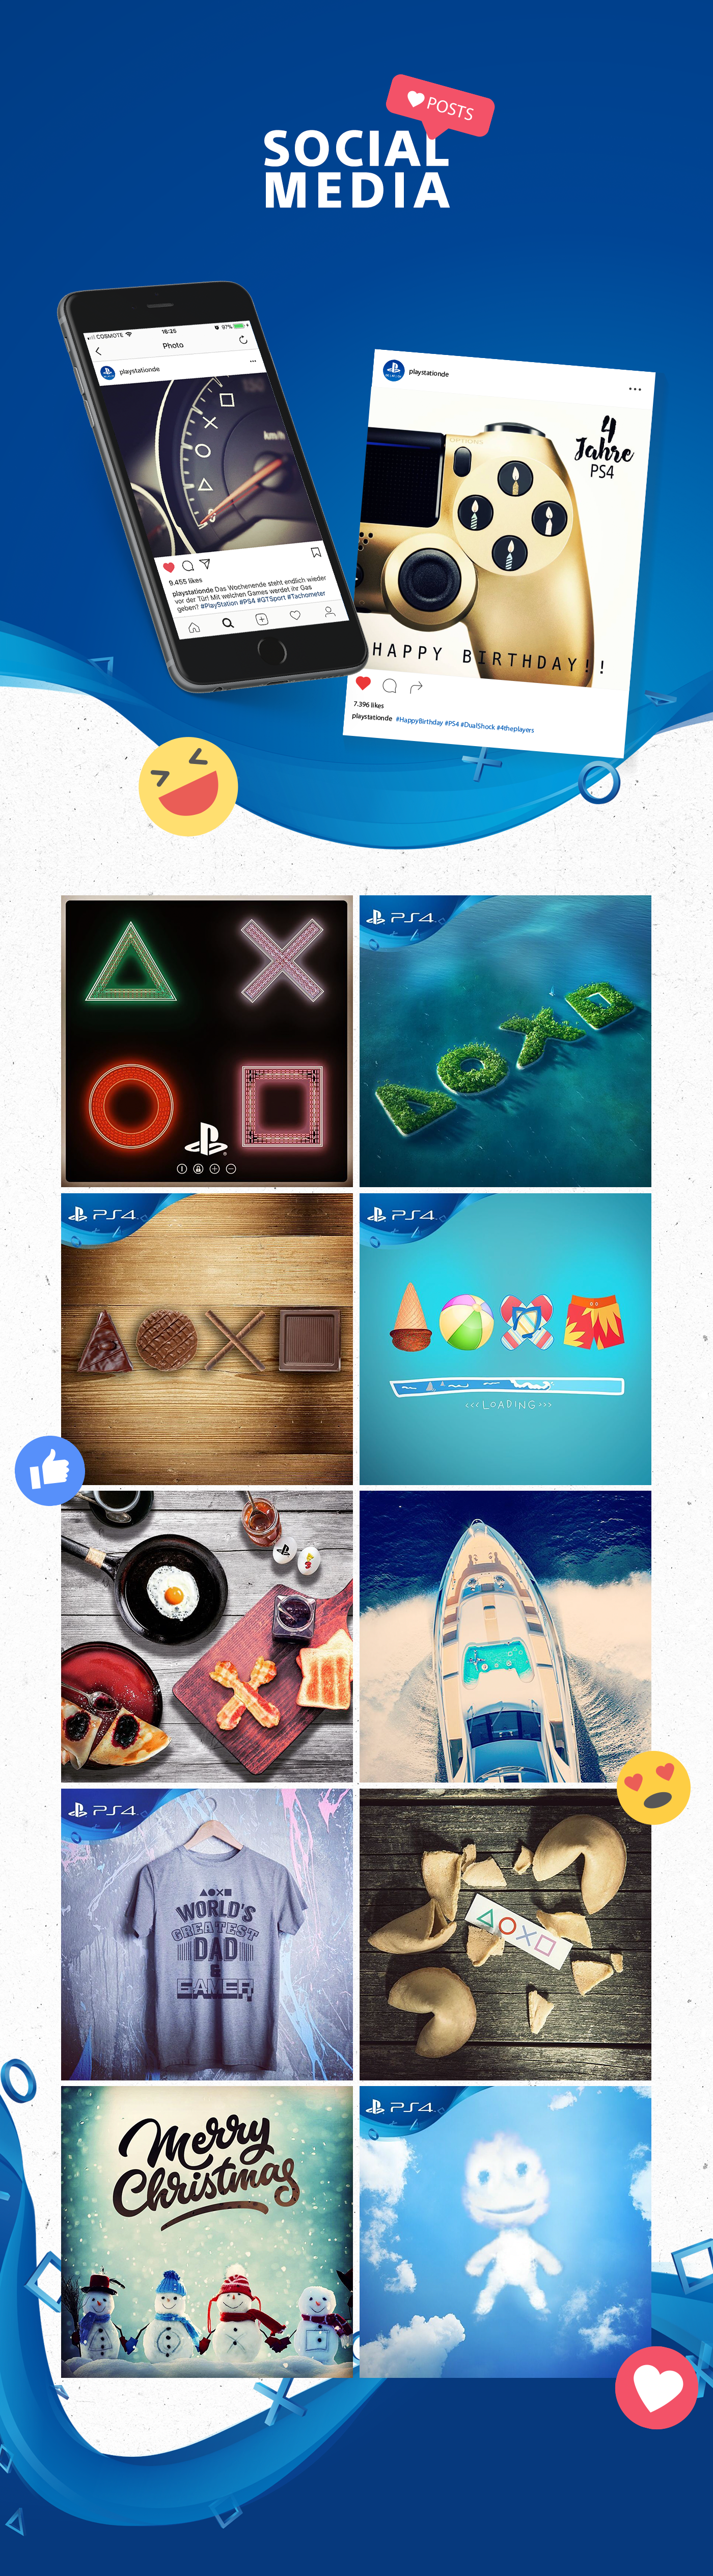 social media posts instagram facebook creative marketing   playstation Games twitter